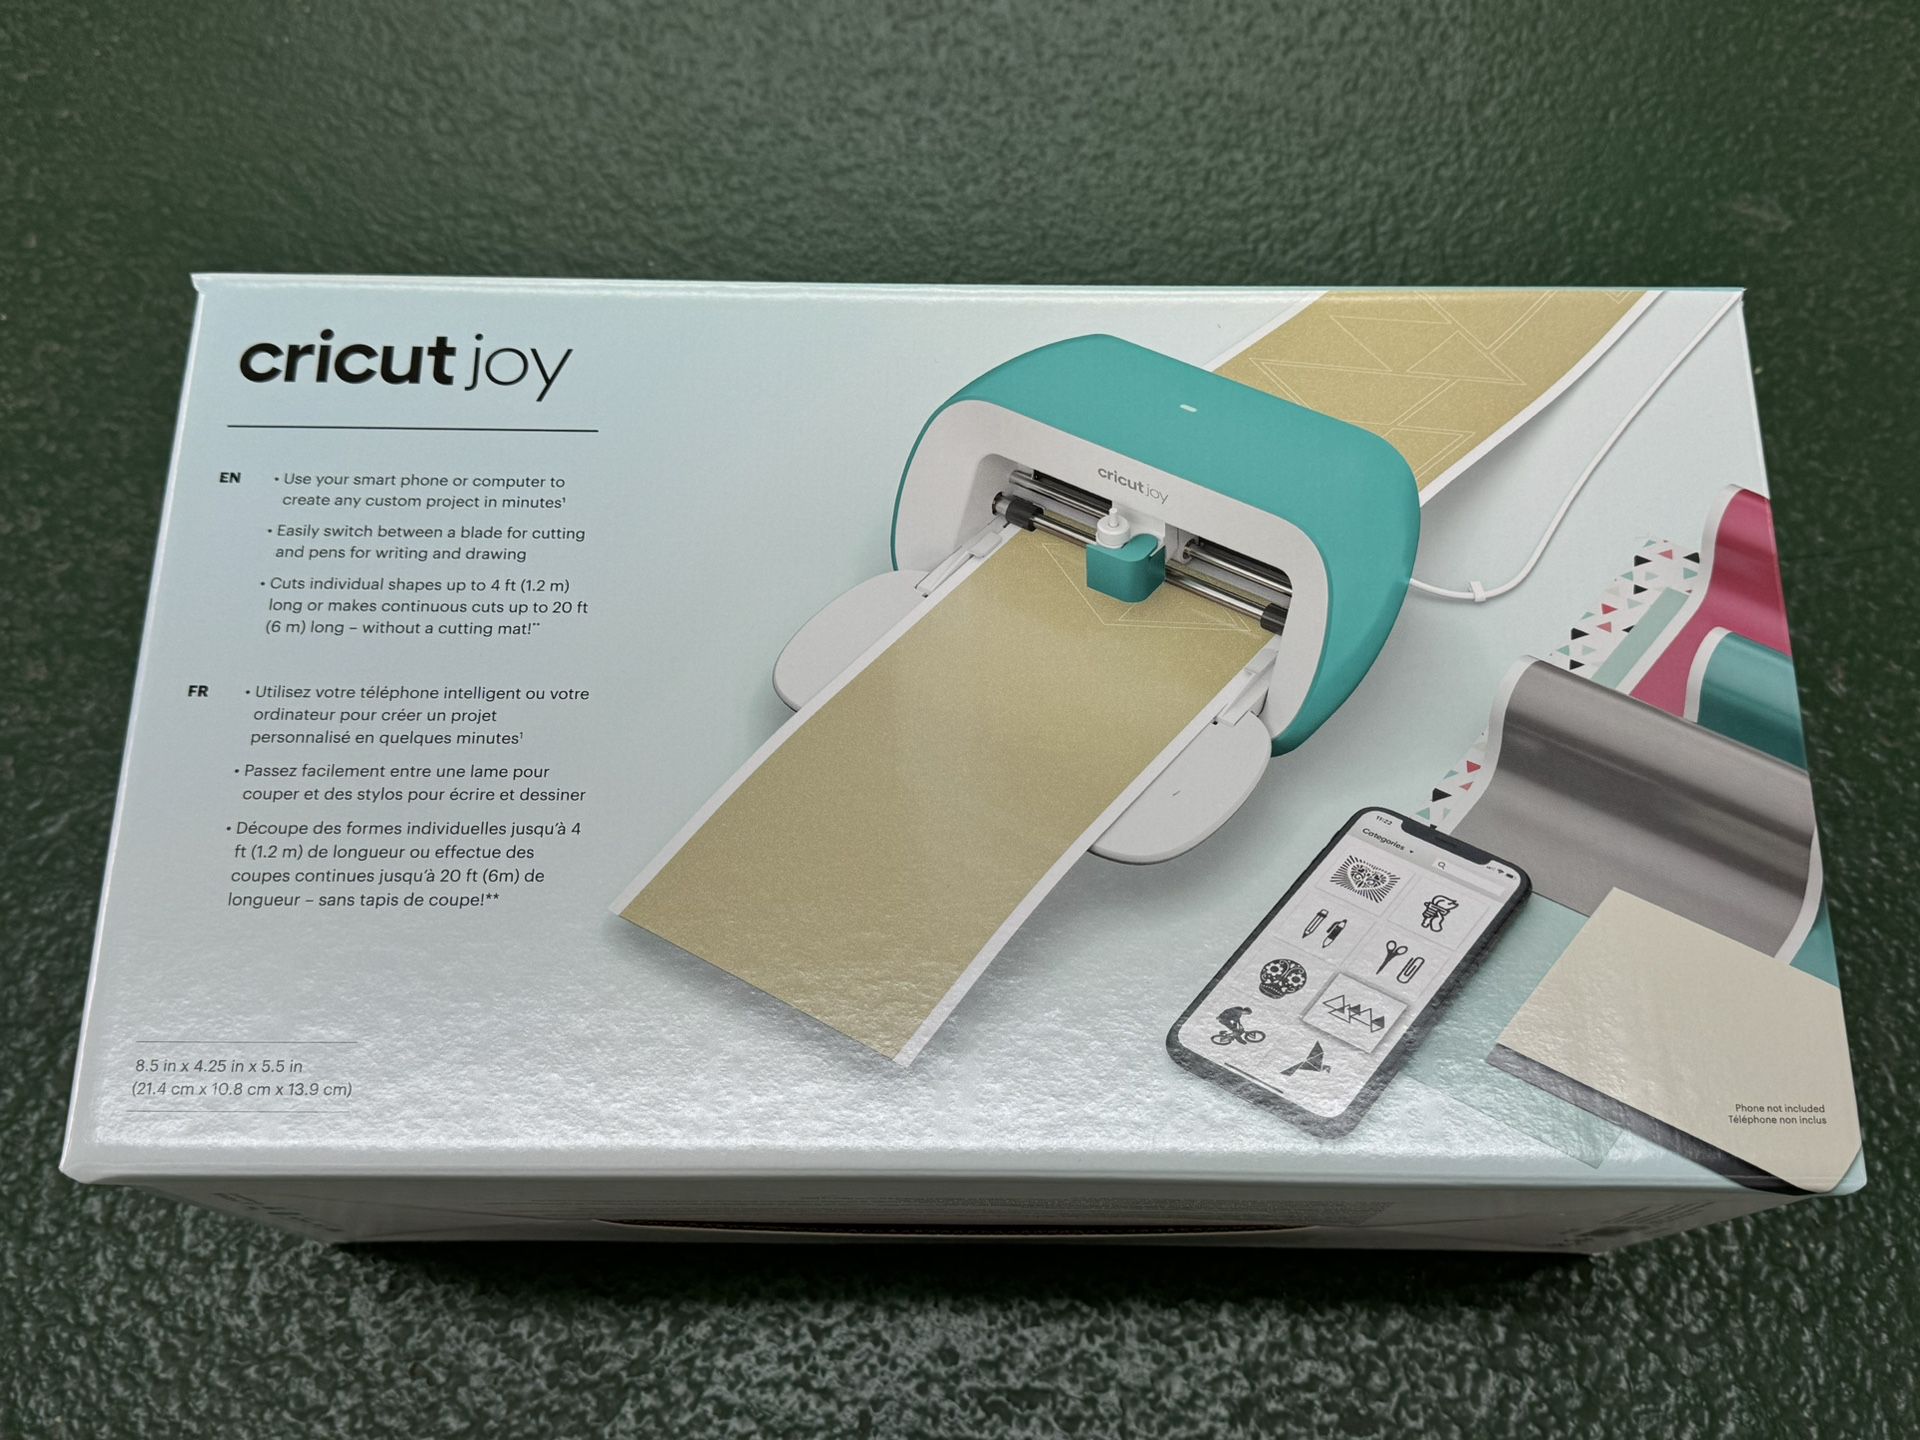 NEW! Cricut Joy Compact Smart Cutting Machine and Portable DIY